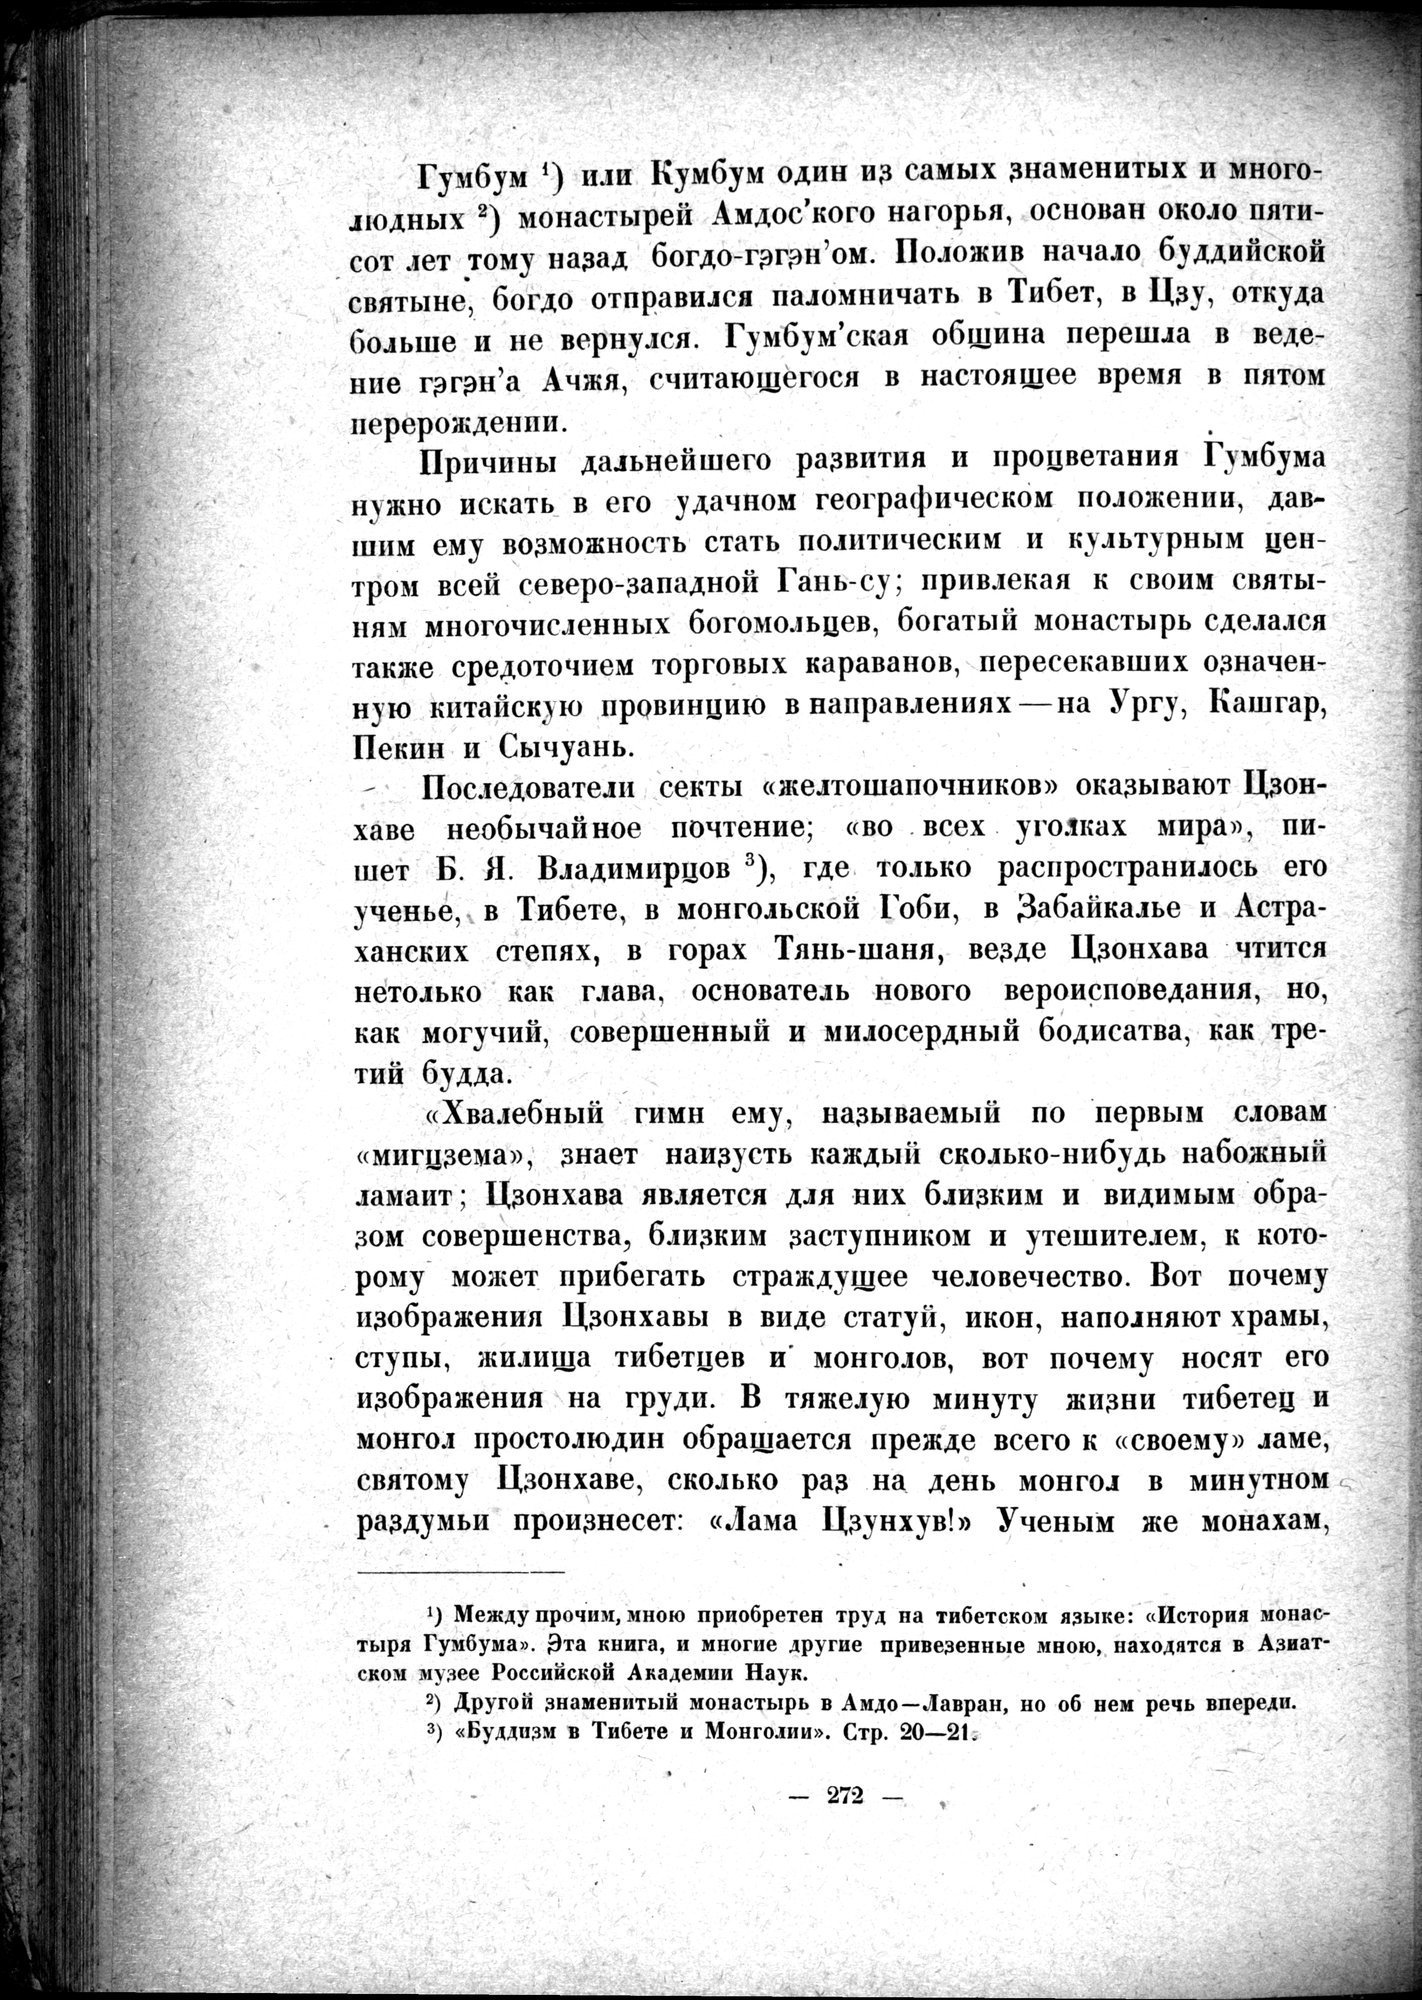 Mongoliya i Amdo i mertby gorod Khara-Khoto : vol.1 / Page 322 (Grayscale High Resolution Image)